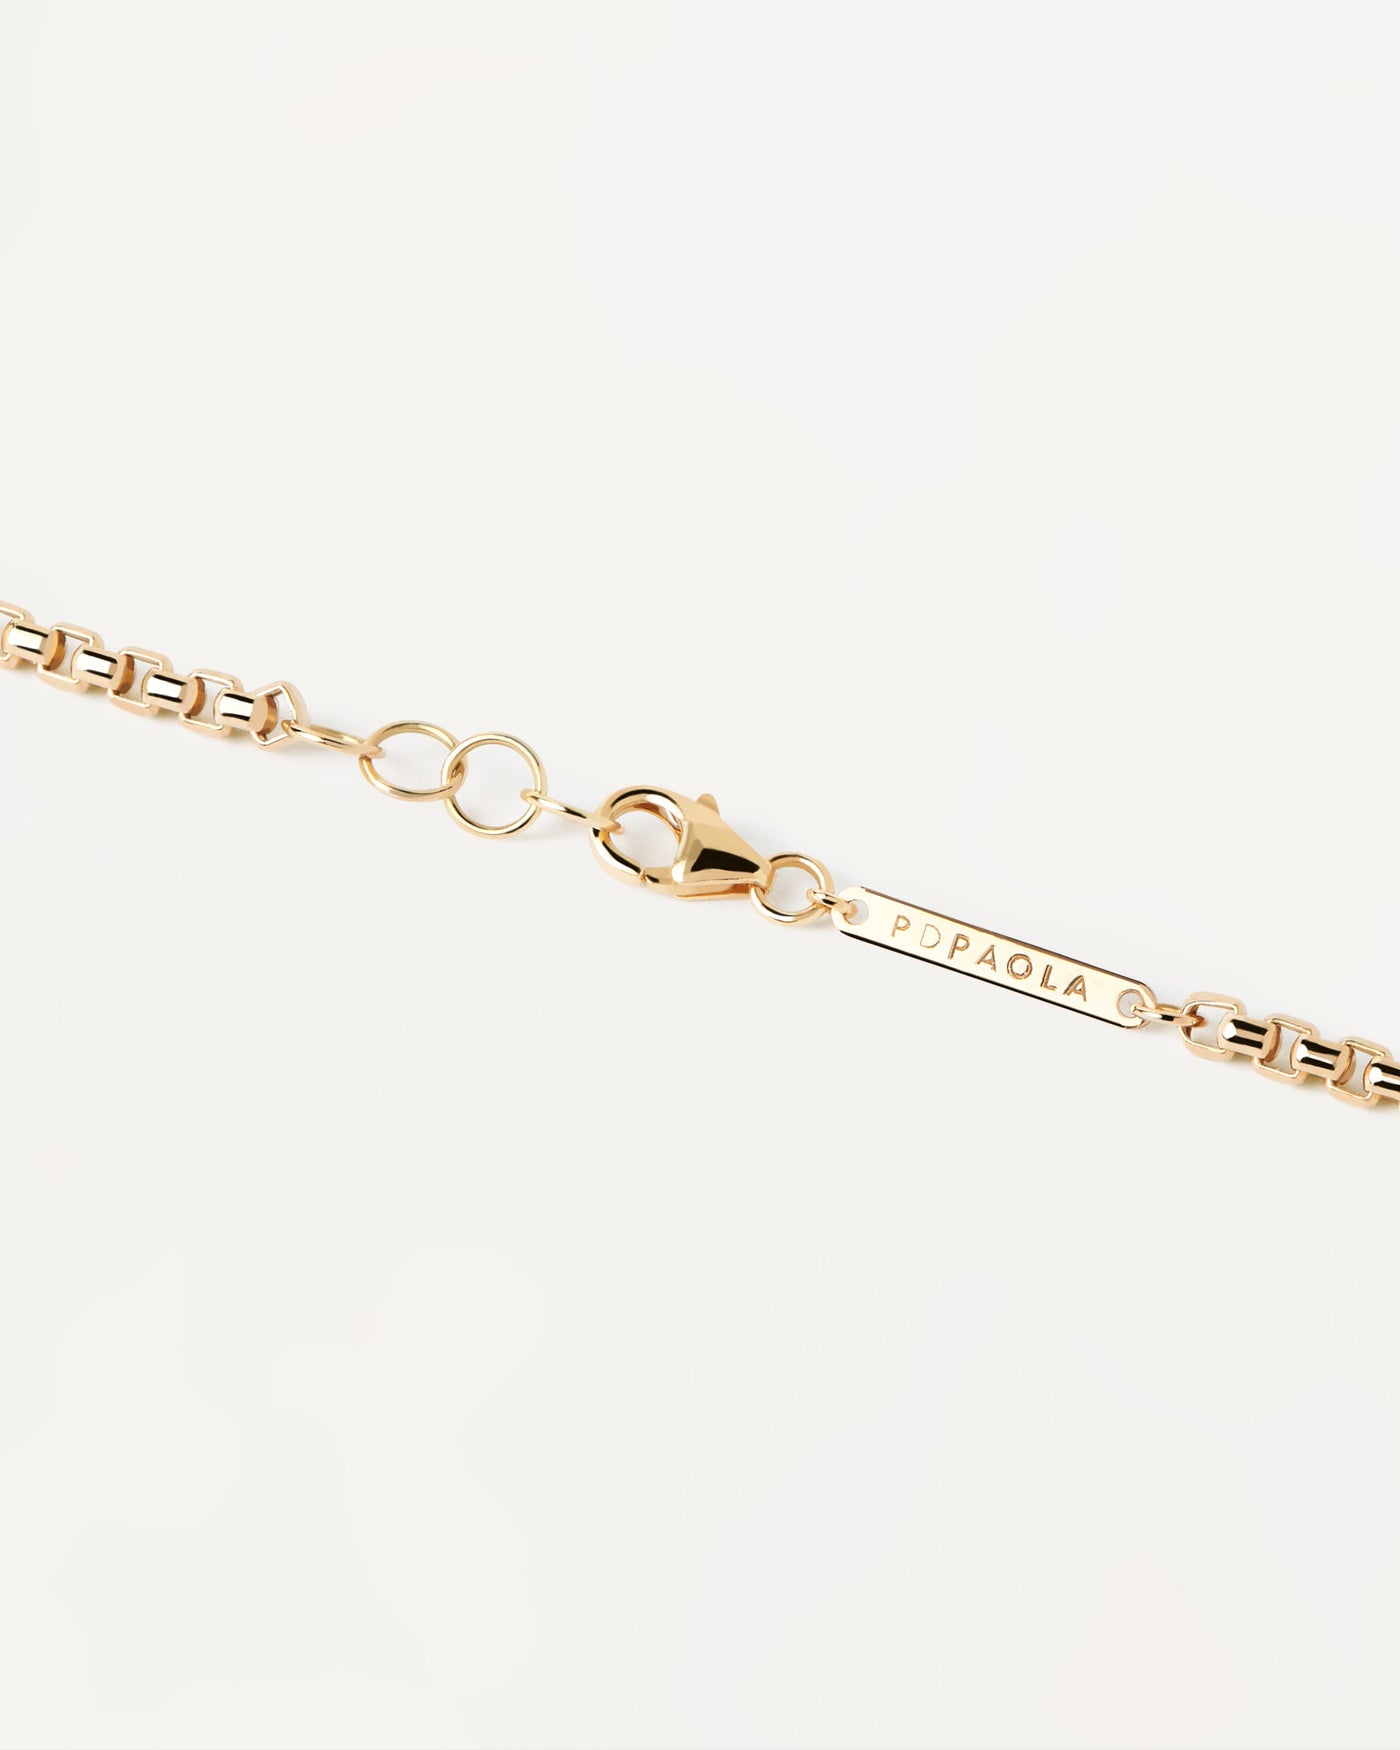 Elongated Box Chain Bracelet in 18K Yellow Gold 883932898910 - Mednikow